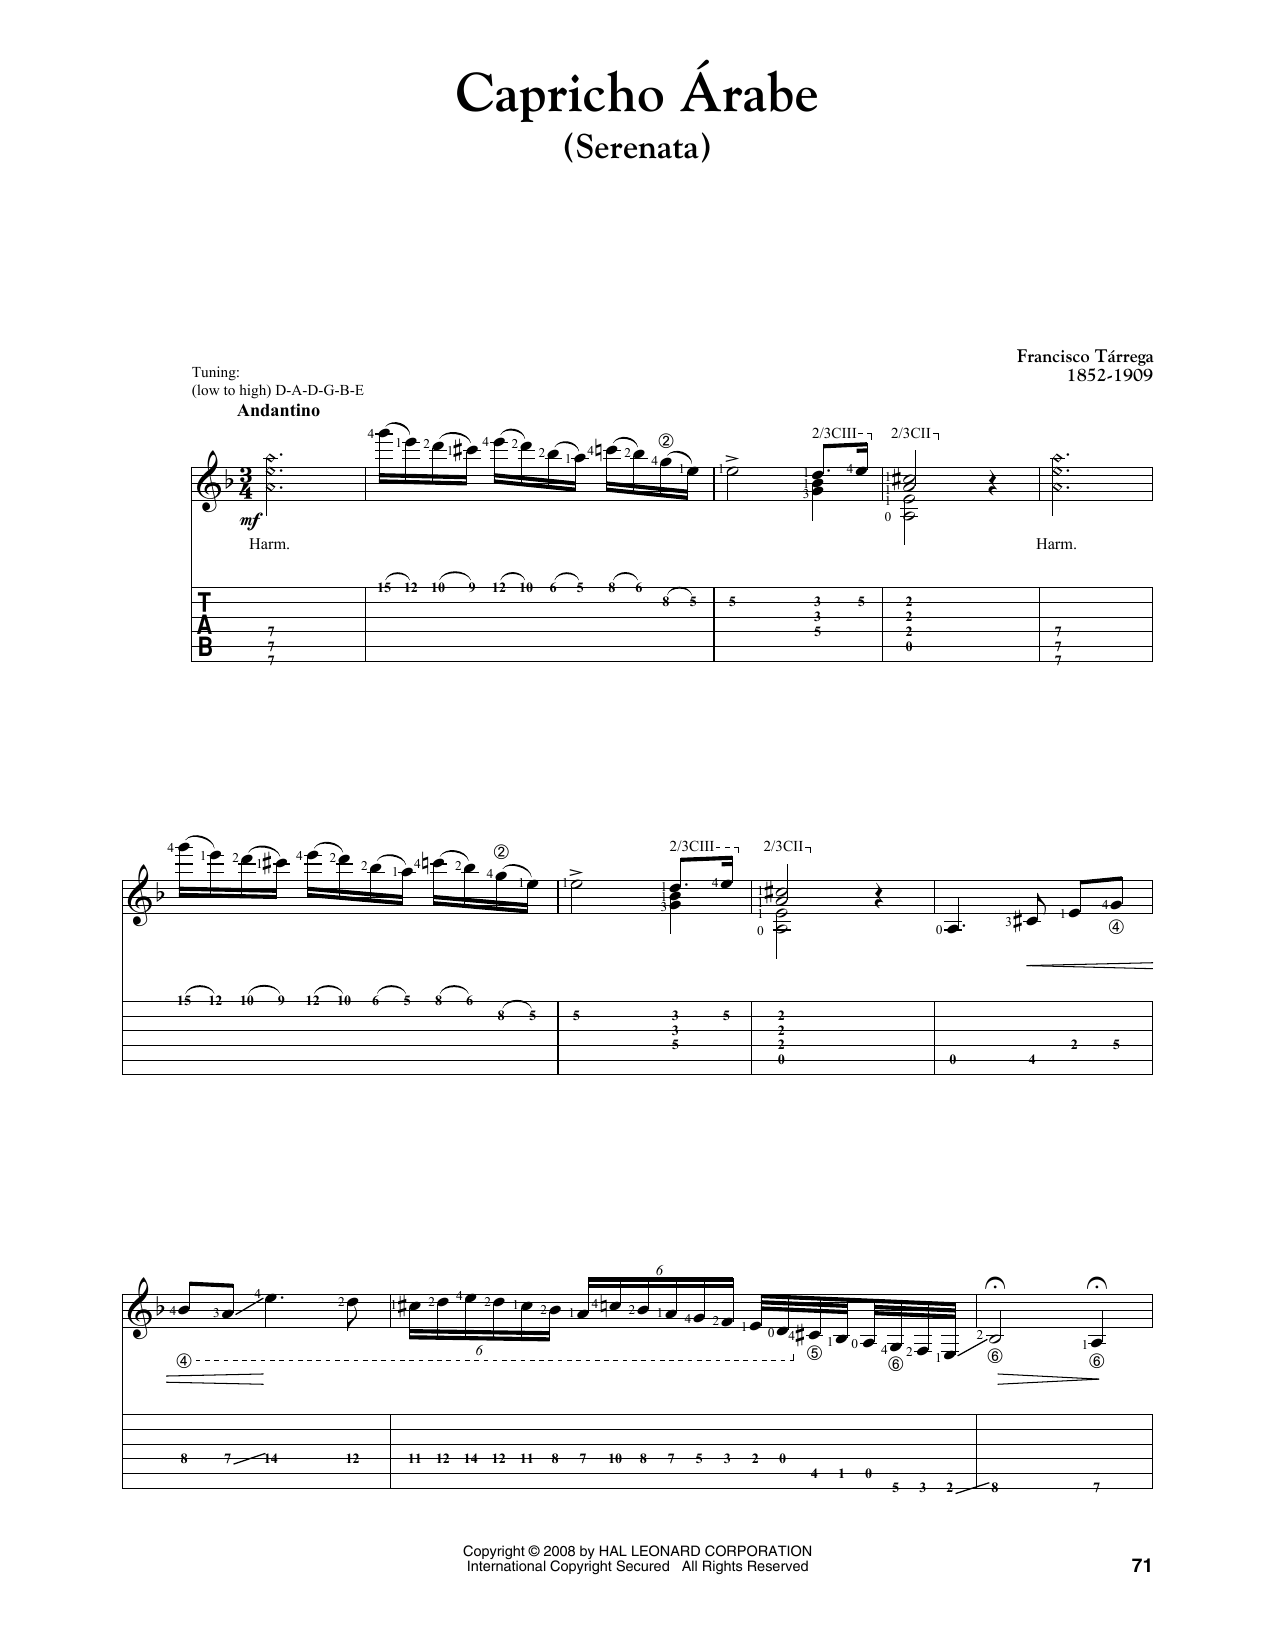 Francisco Tarrega Capricho Arabe (Serenata) Sheet Music Notes & Chords for Solo Guitar Tab - Download or Print PDF